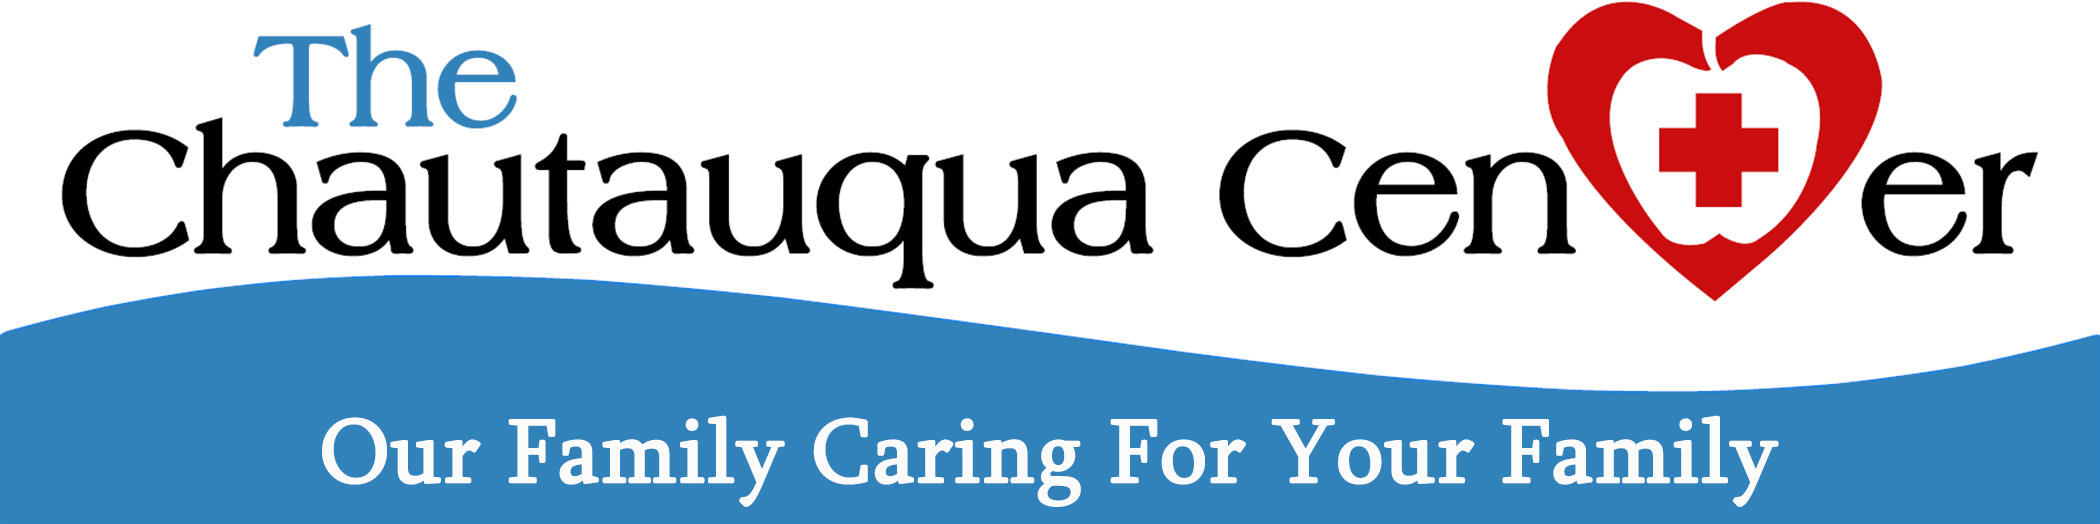 The Chautauqua Center - Dunkirk Primary Care and Behavioral Health